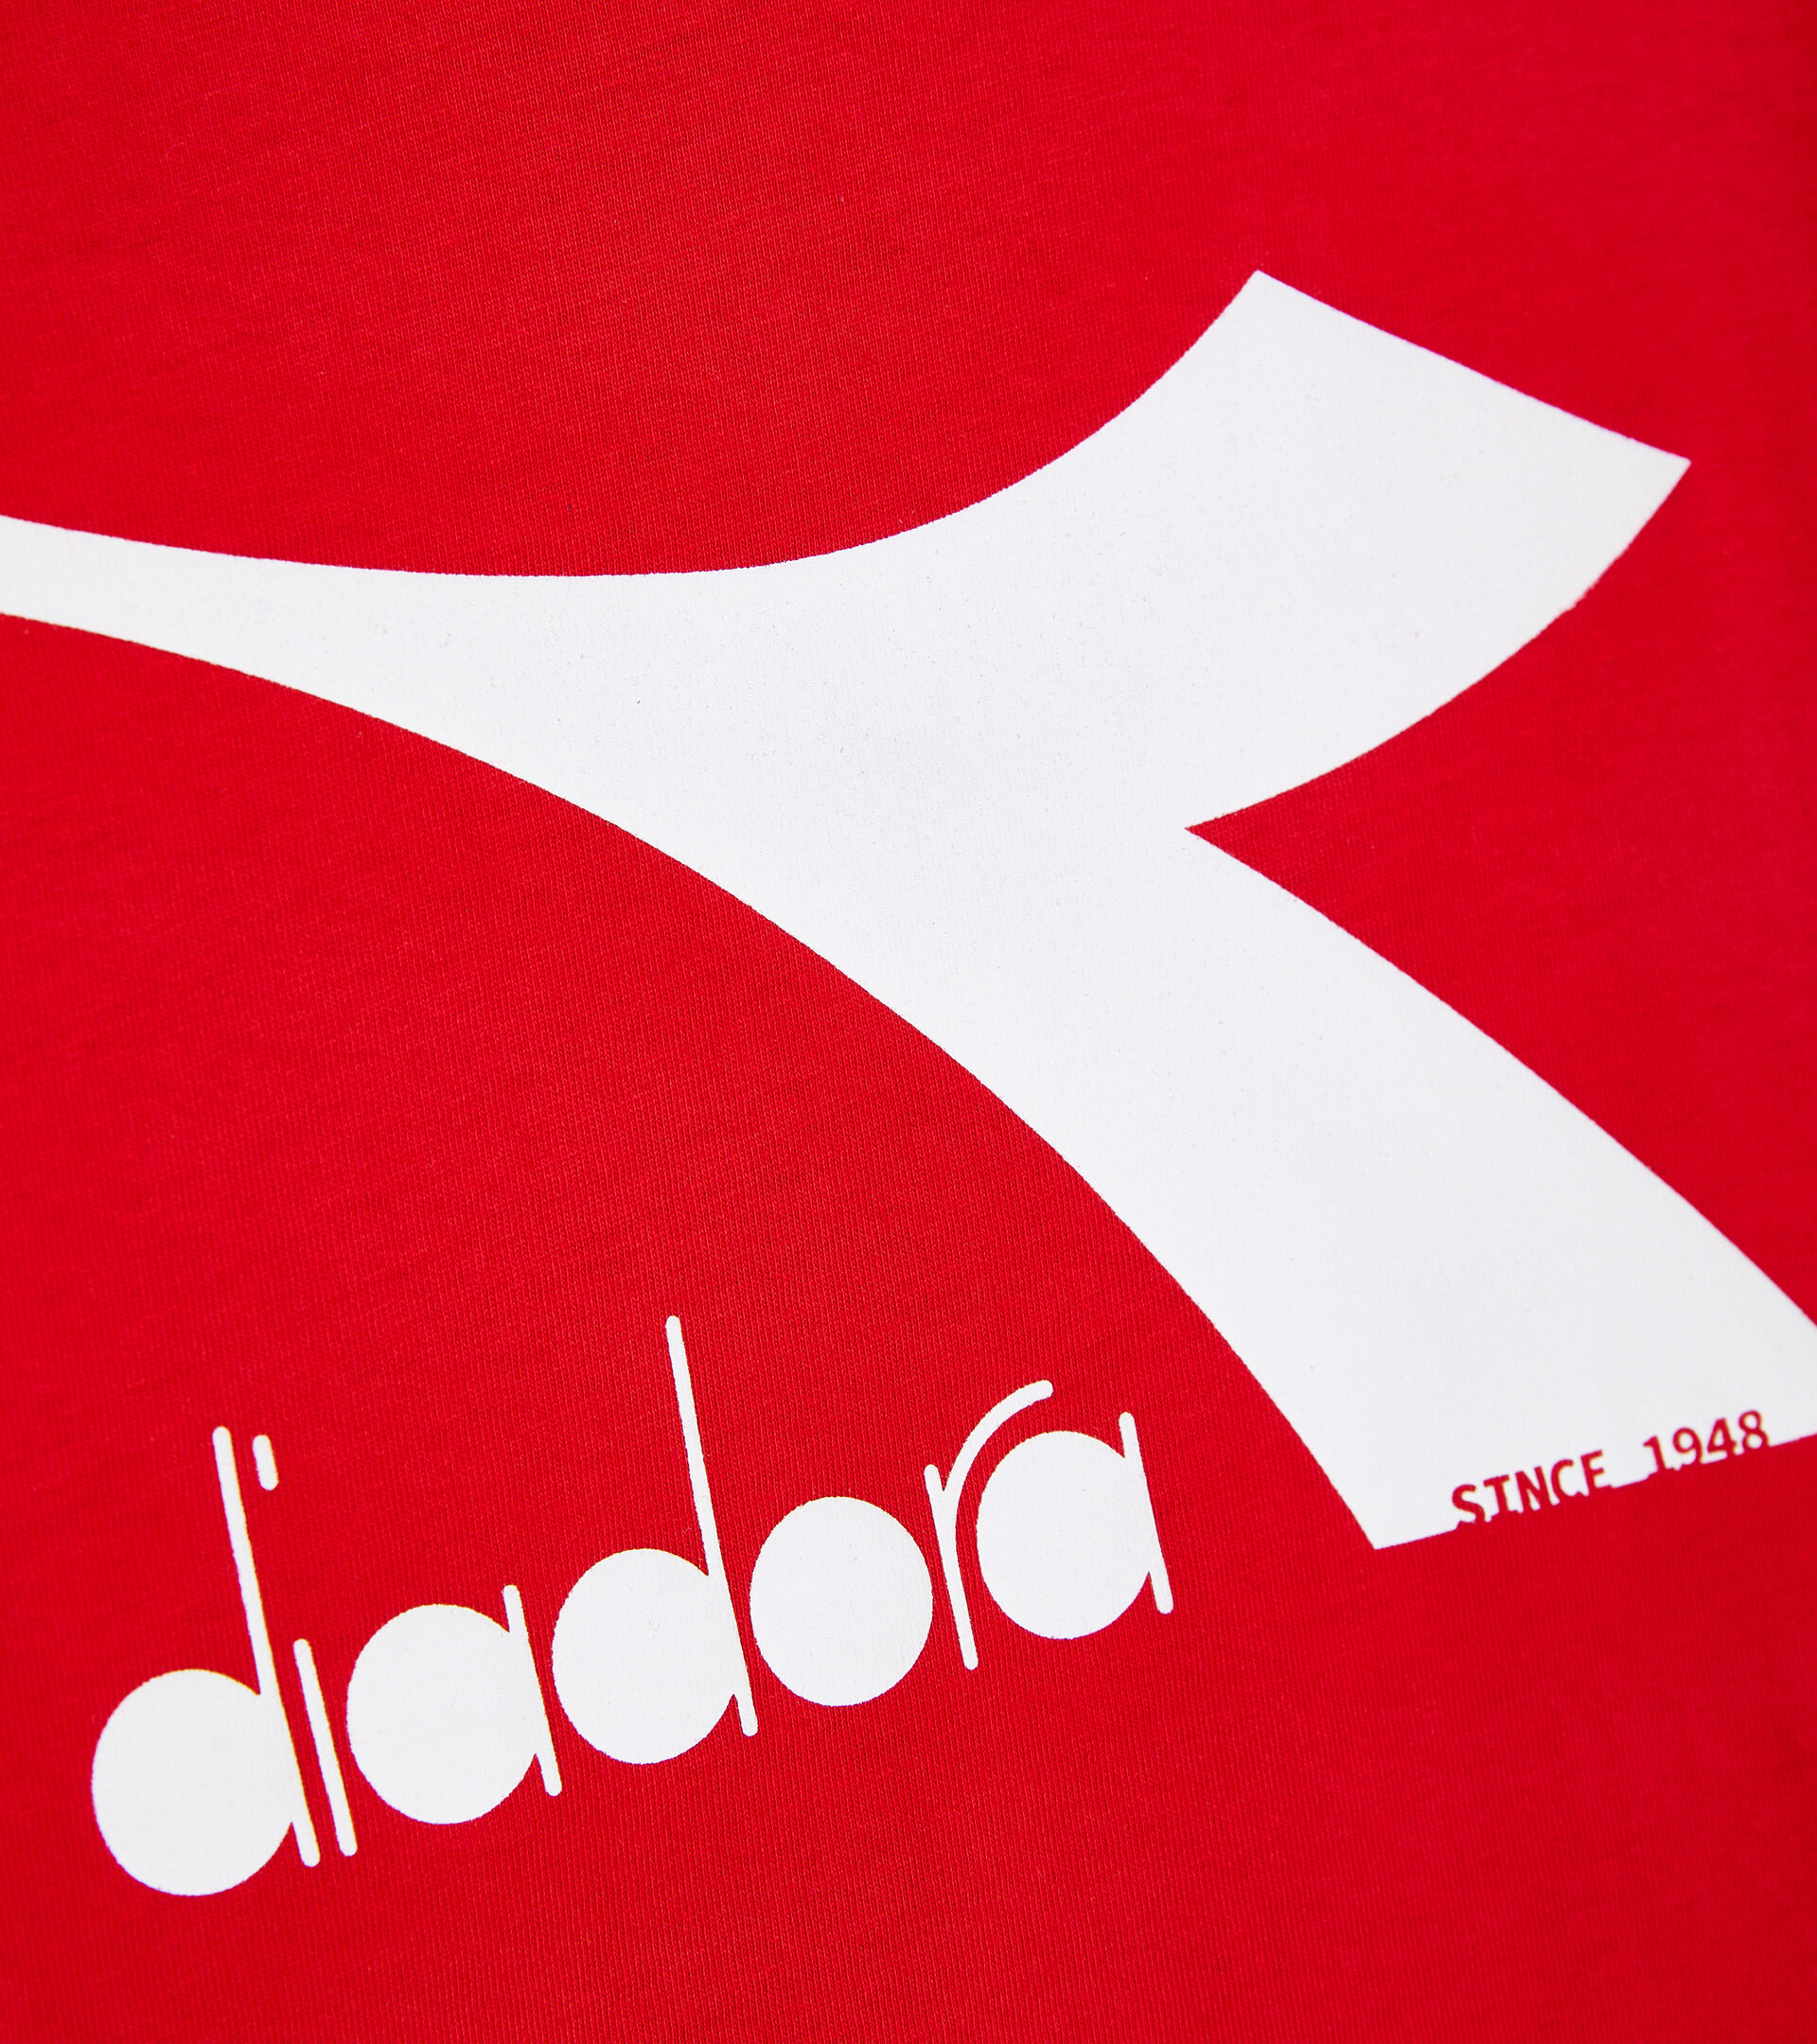 T-shirt de sport - Enfants
 JU.T-SHIRT SS BL HAUT RISQUE ROUGE - Diadora